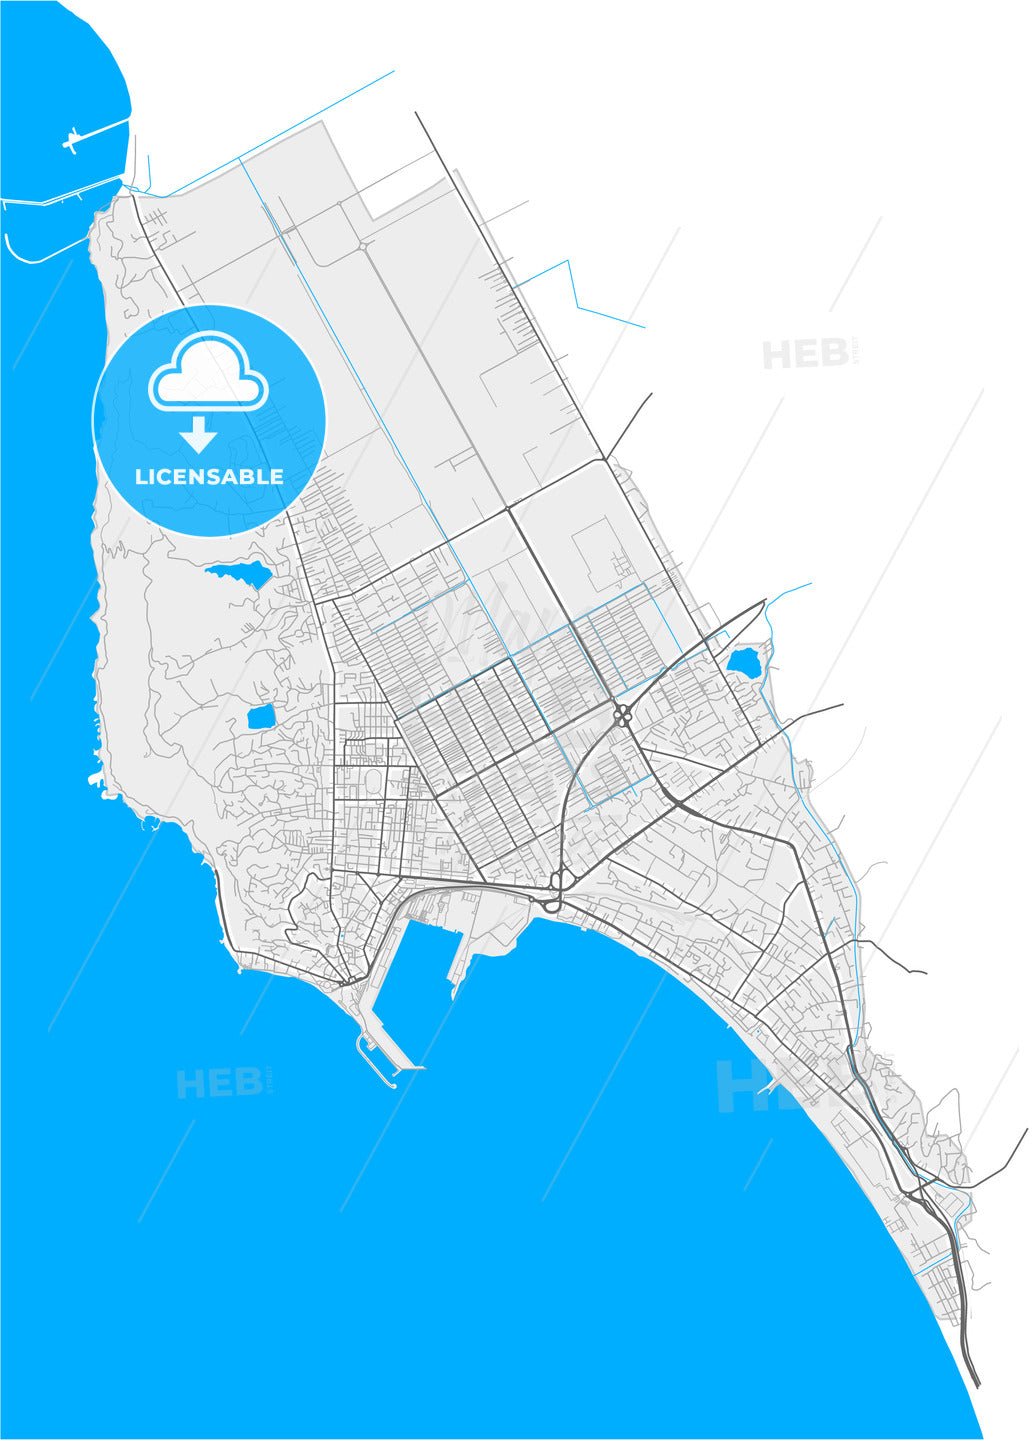 Durrës, Albania, high quality vector map